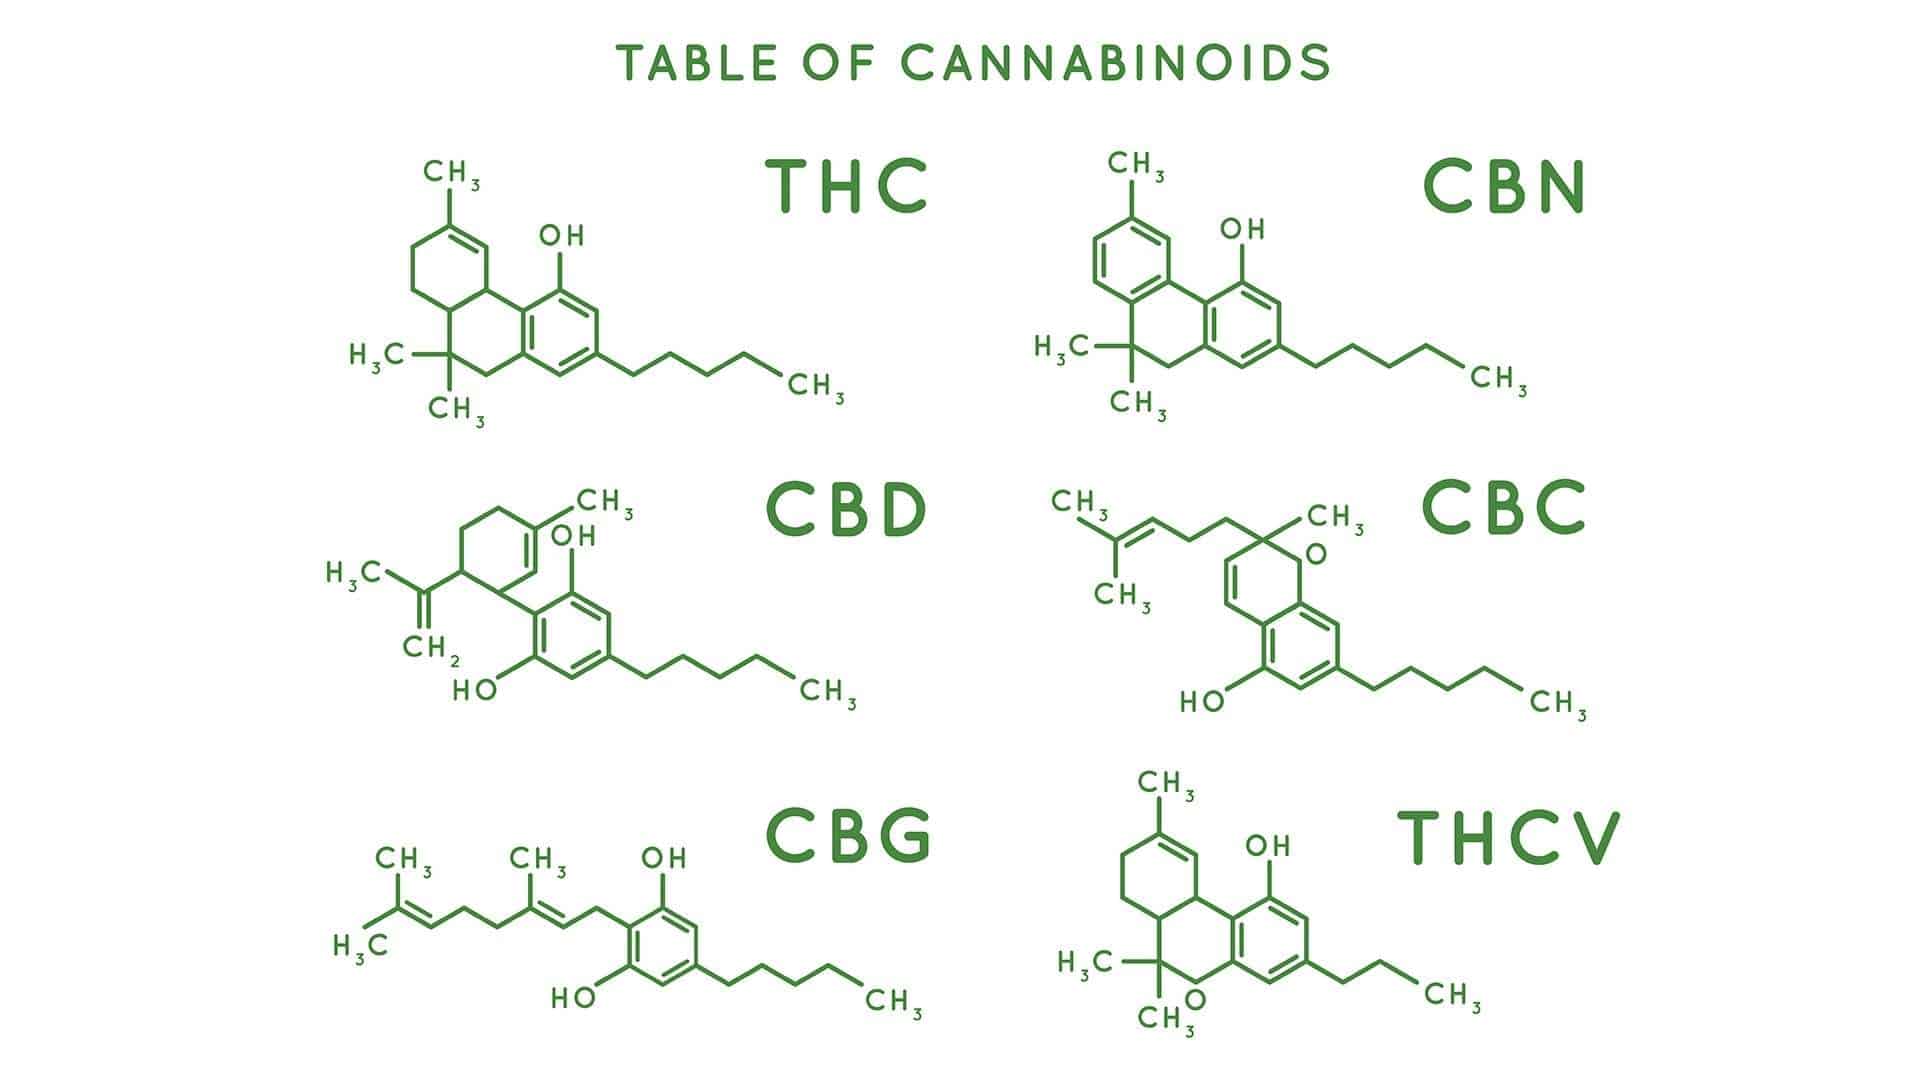 cannabinoids are